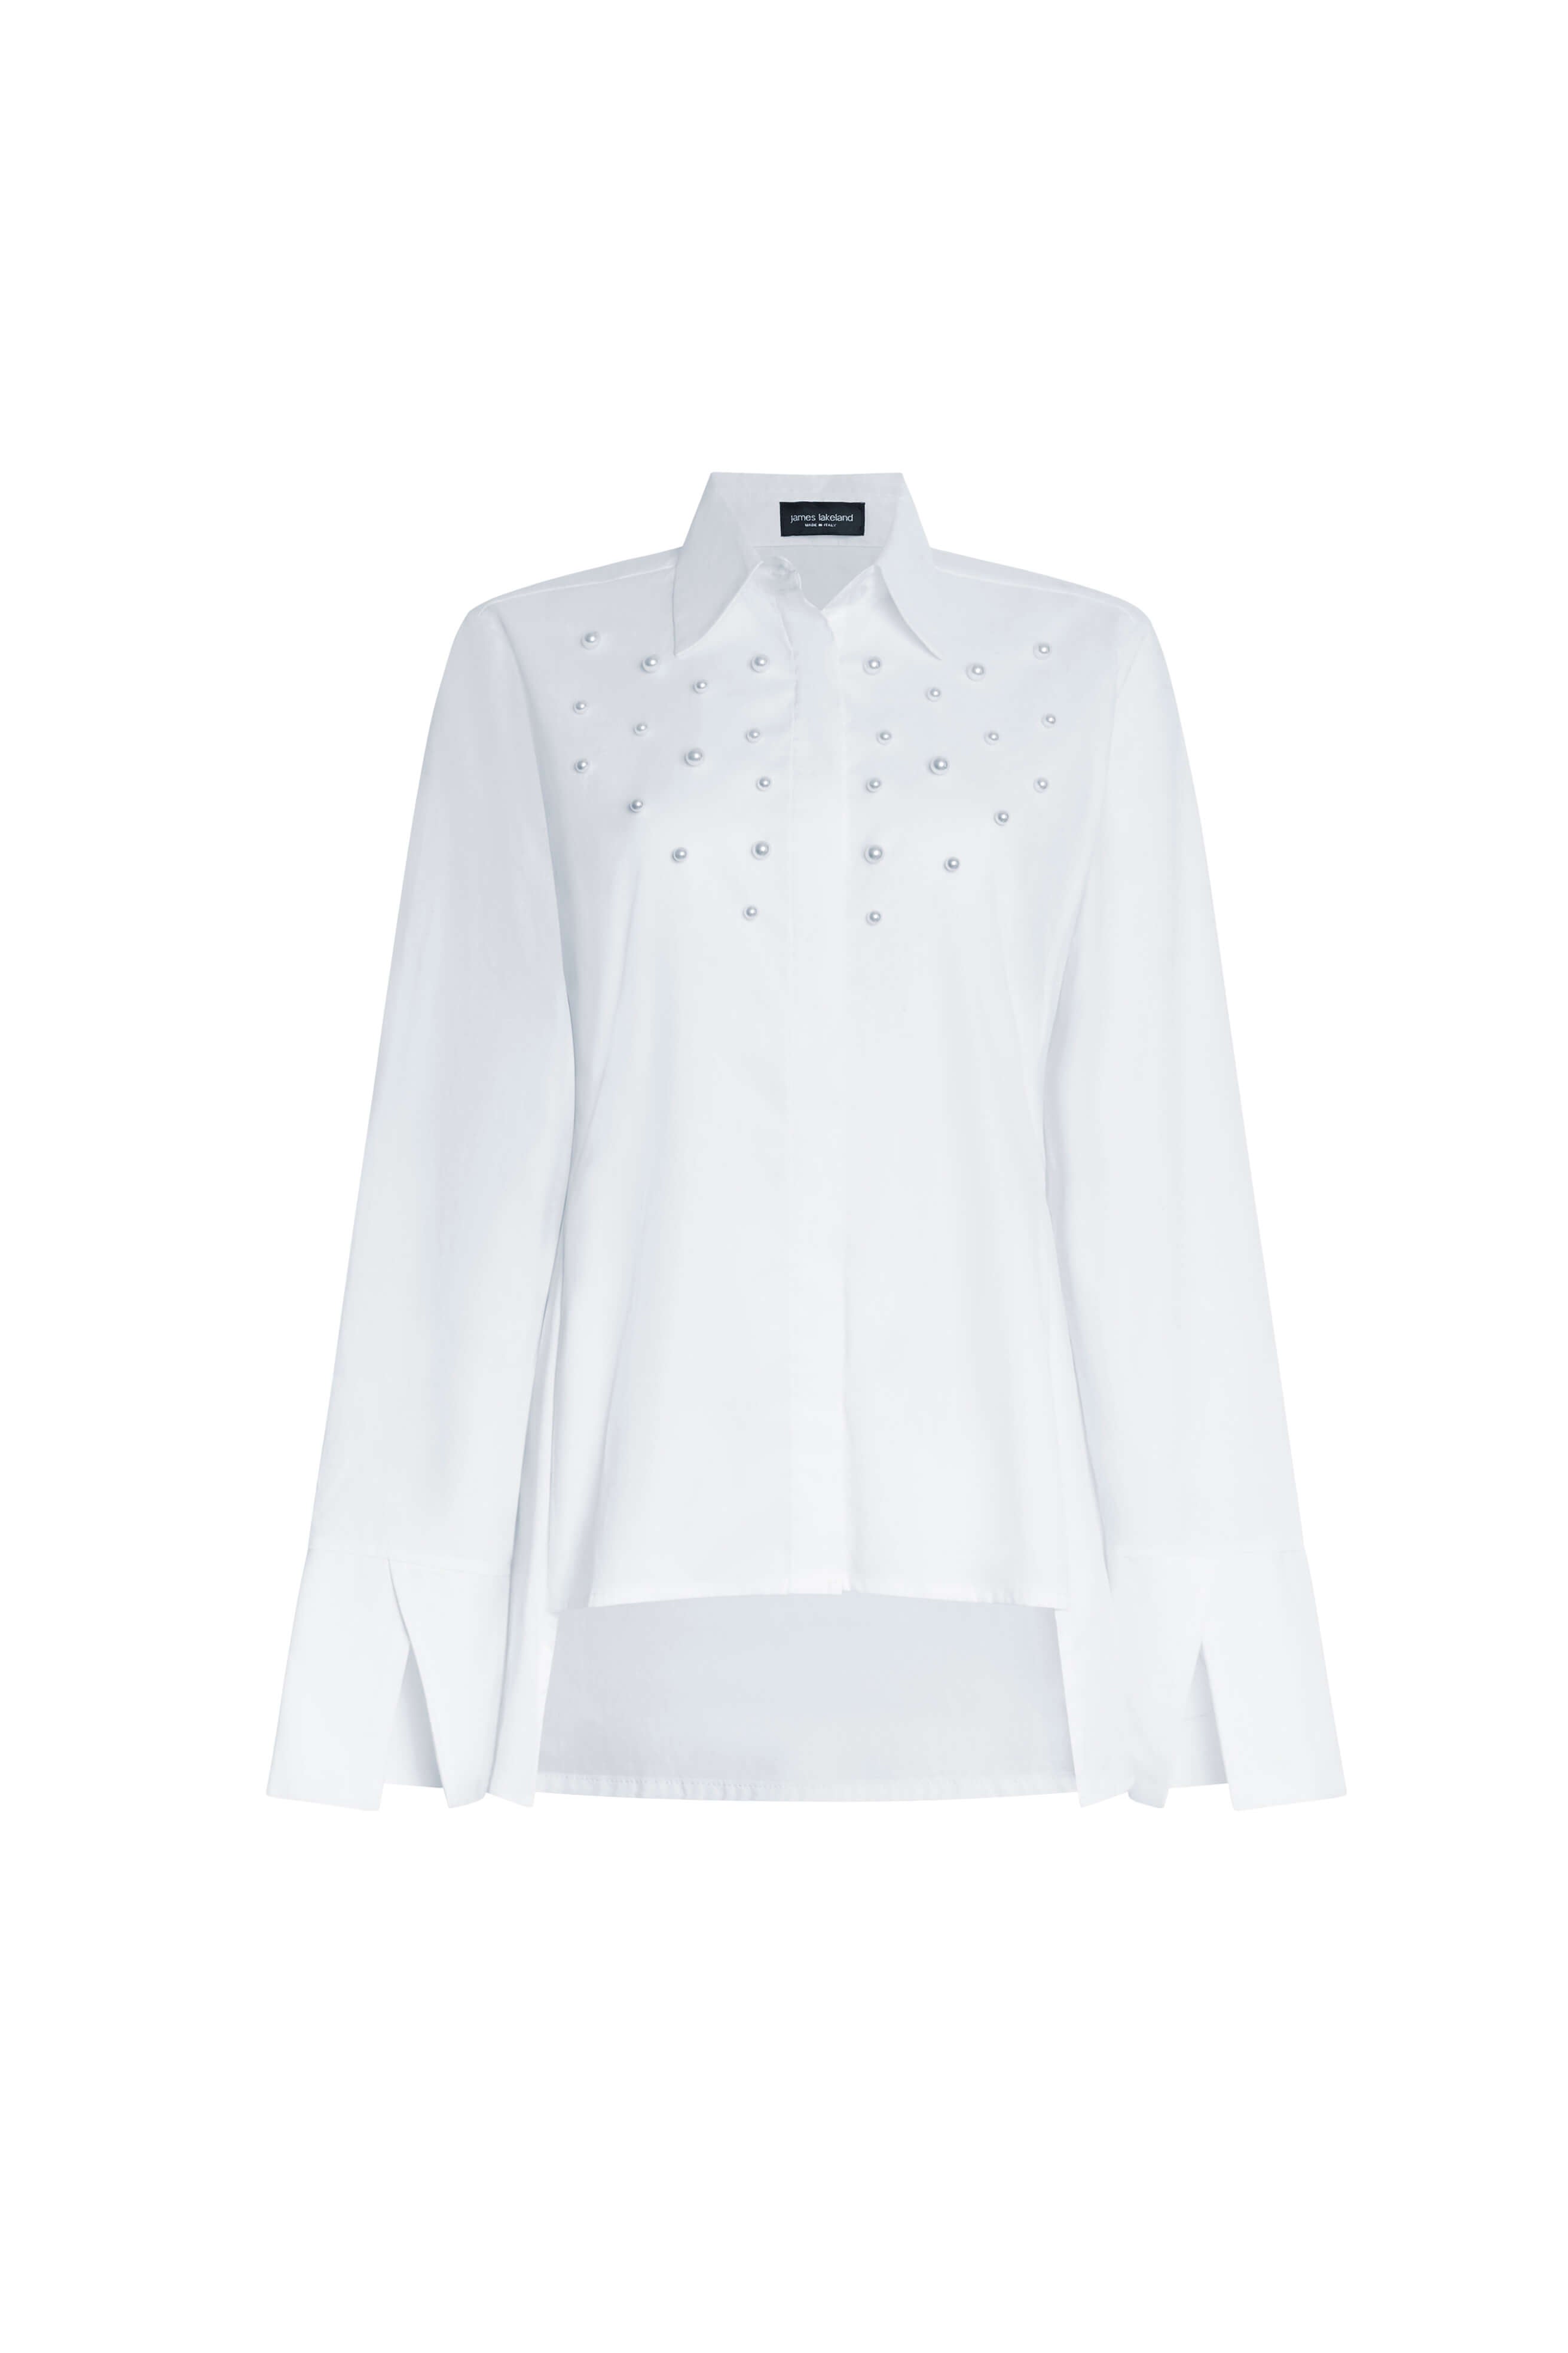 James Lakeland Women's Pearl Detail Shirt White